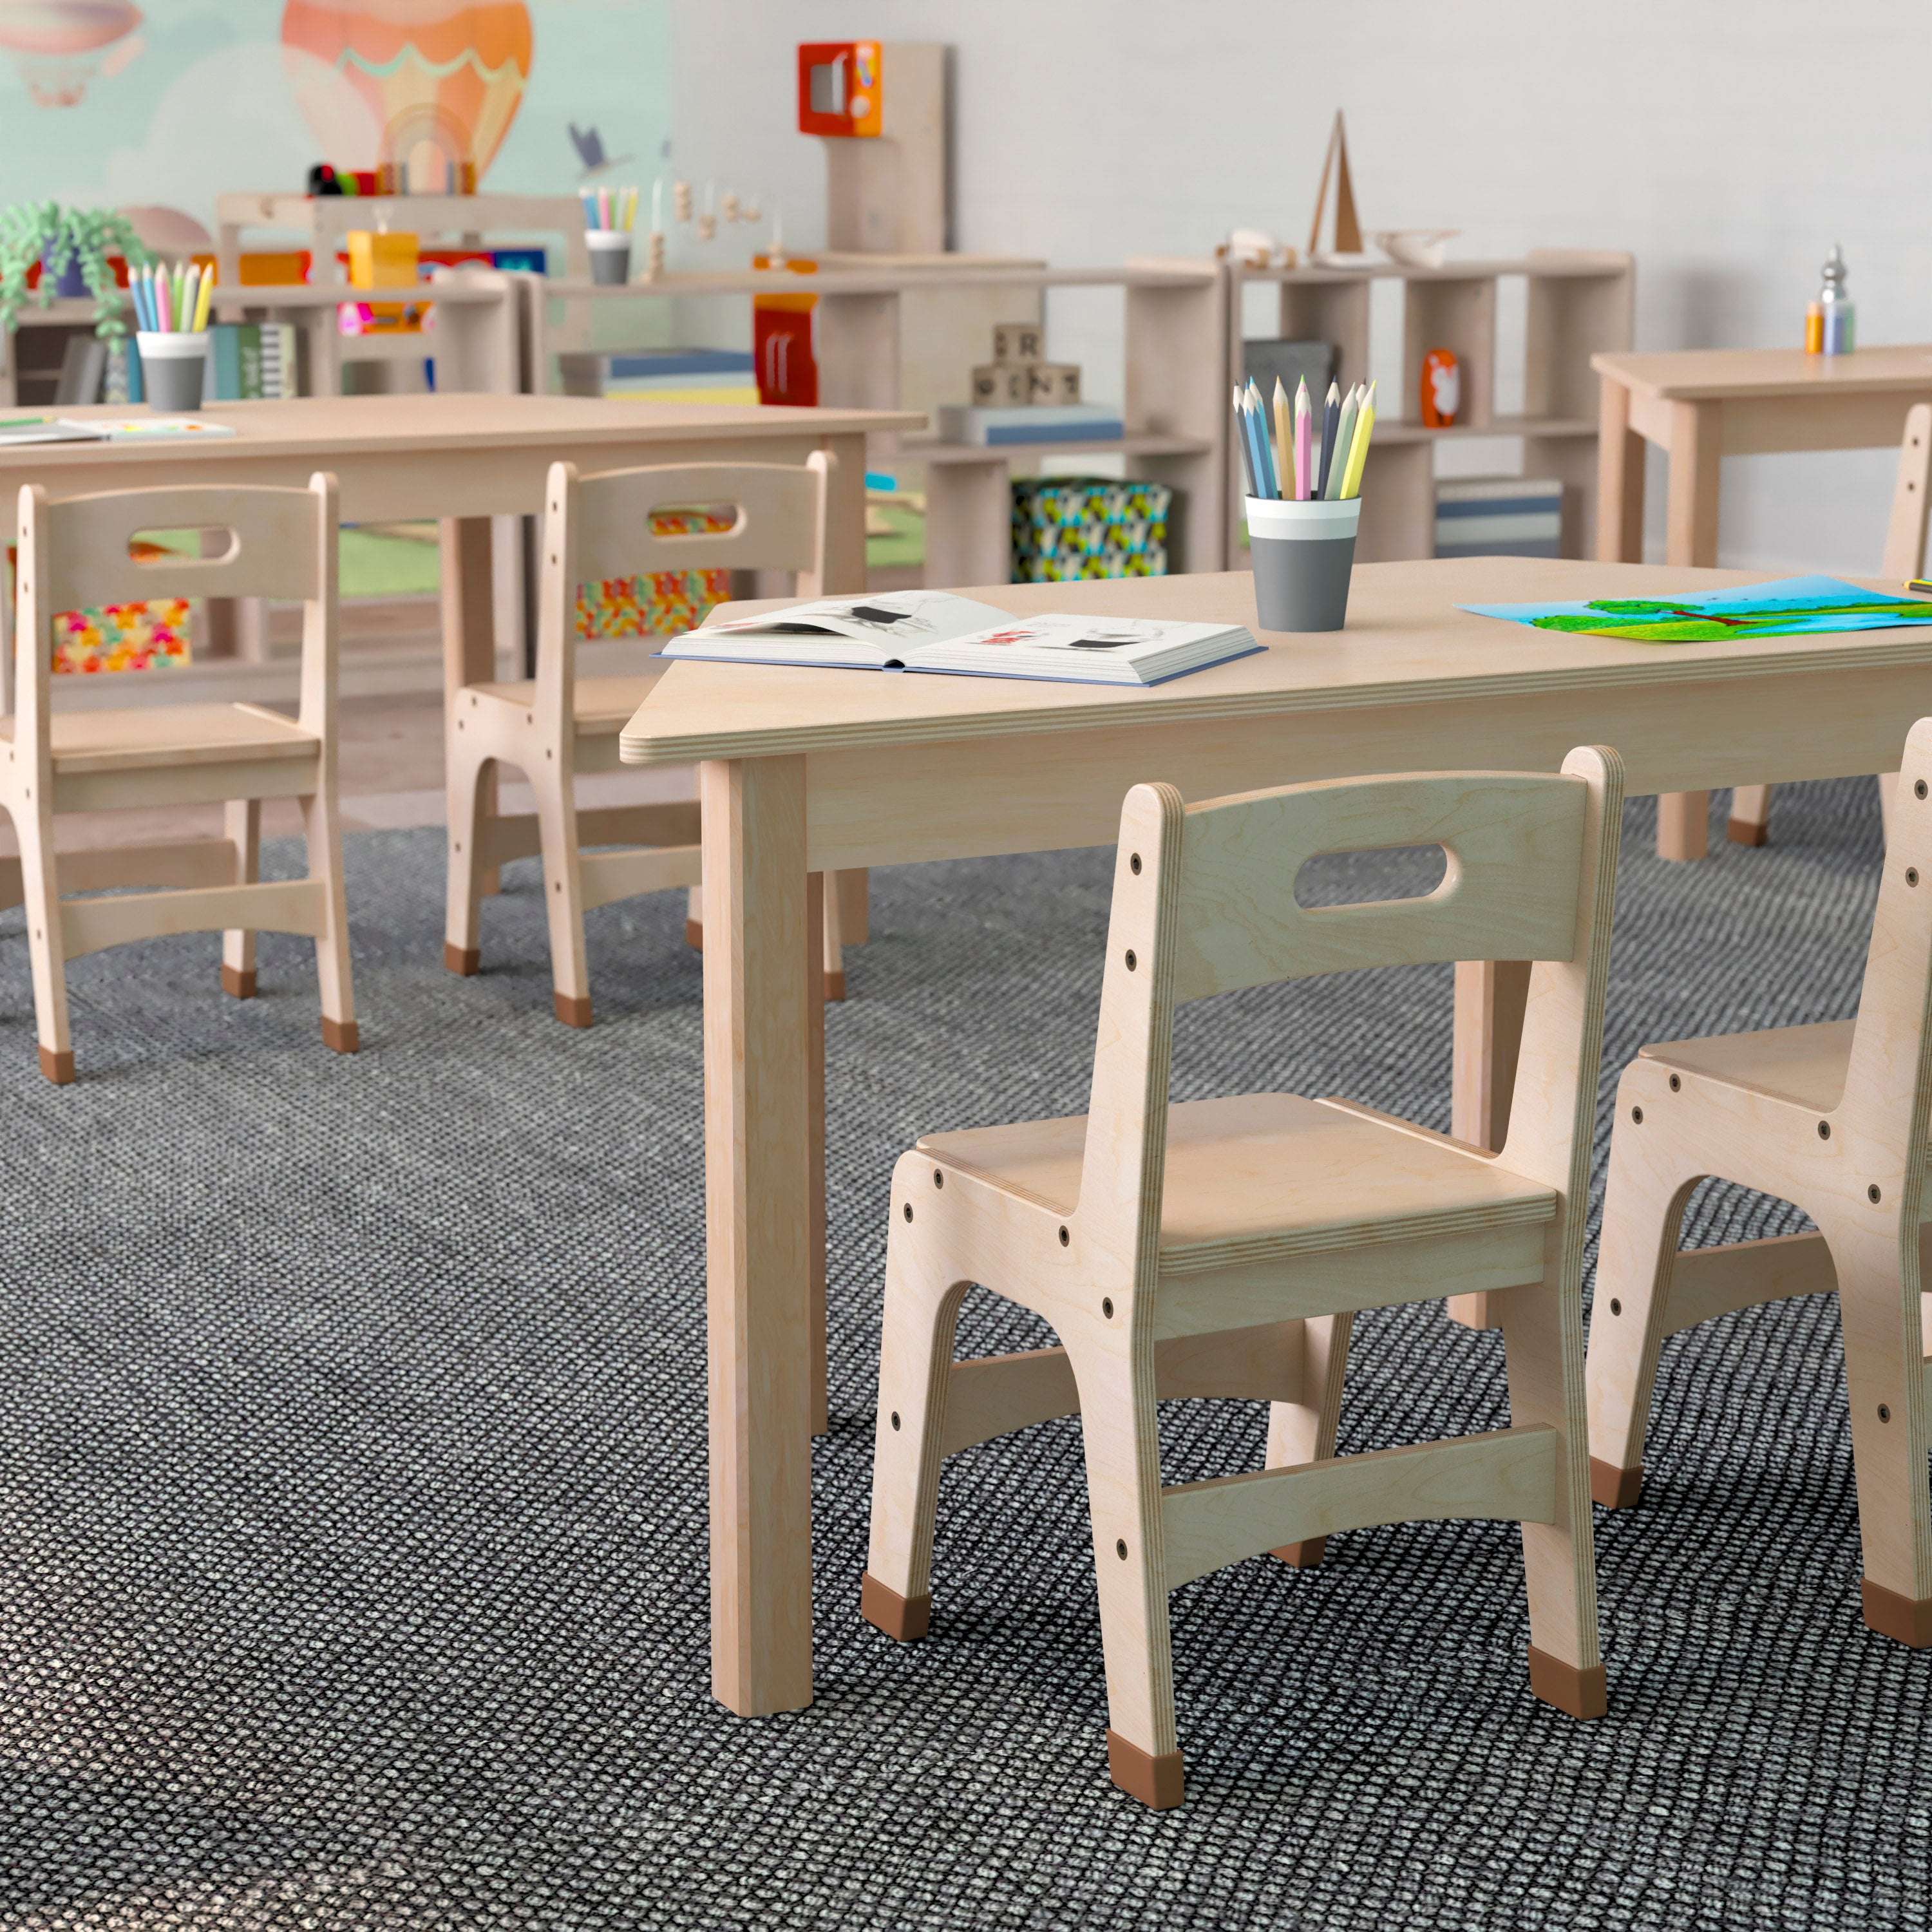 Bright Beginnings Commercial Grade Trapezoid Wooden Preschool Classroom Activity Table-Trapezoid Activity Table-Flash Furniture-Wall2Wall Furnishings